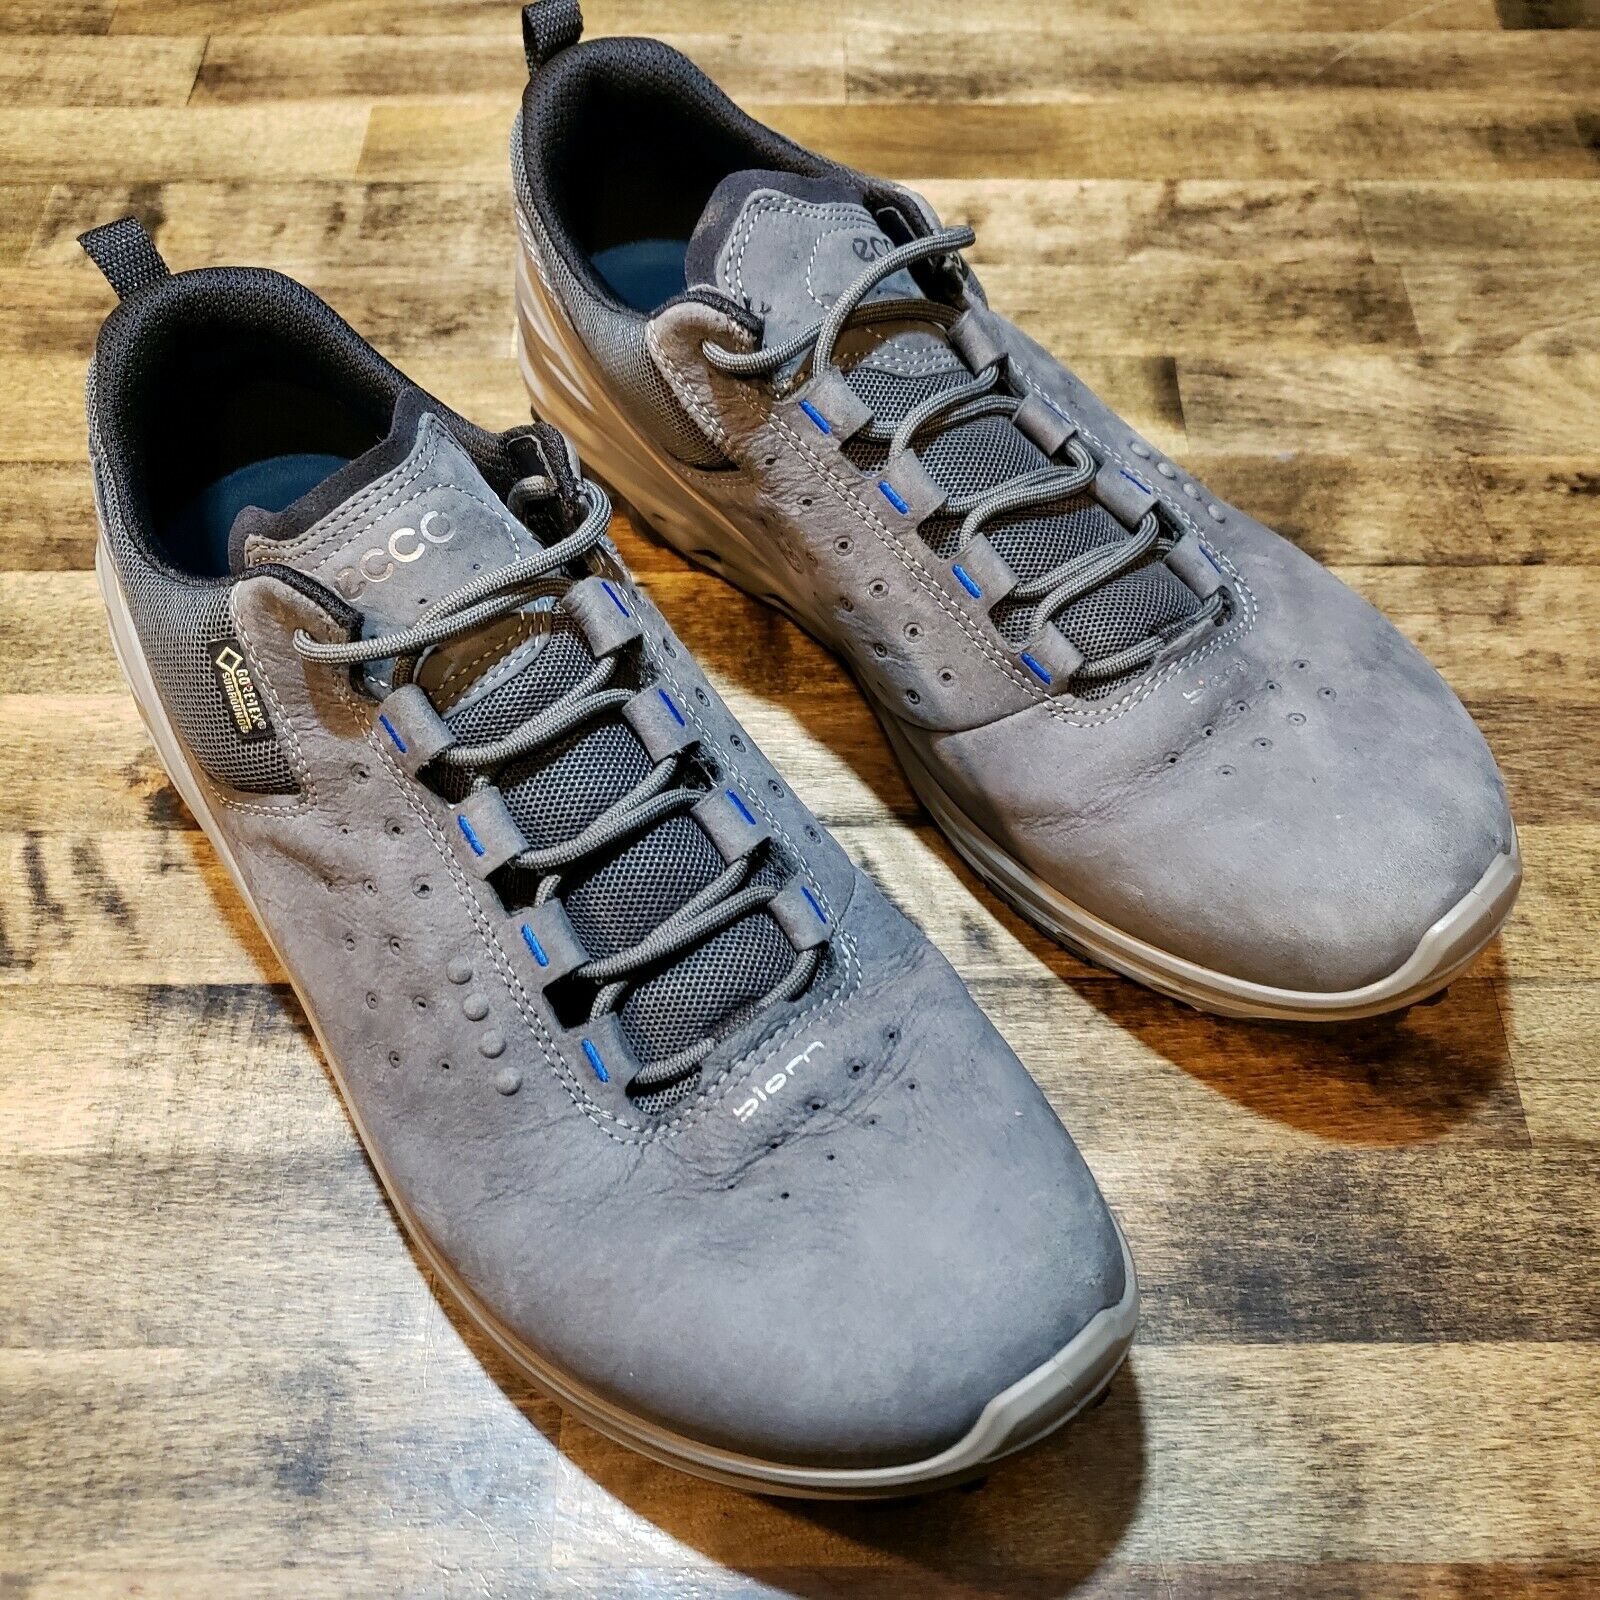 Men’s Ecco biom venture GTX gore Tex hiking shoes size 9